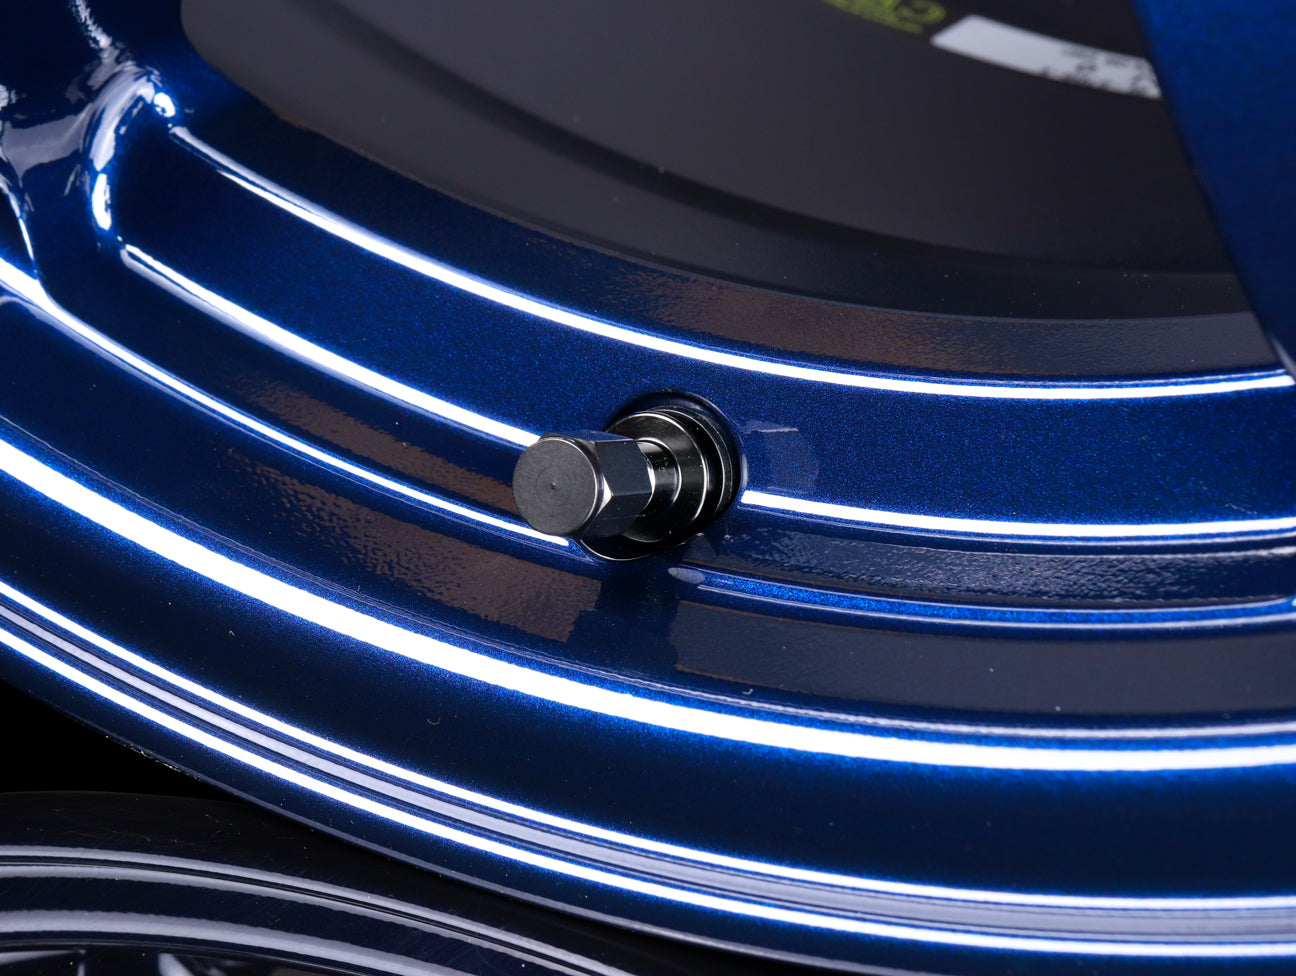 Rays Gram Lights 57DR-X Wheel - Eternal Blue Pearl - 17x8.5 / 6x139.7 / +0